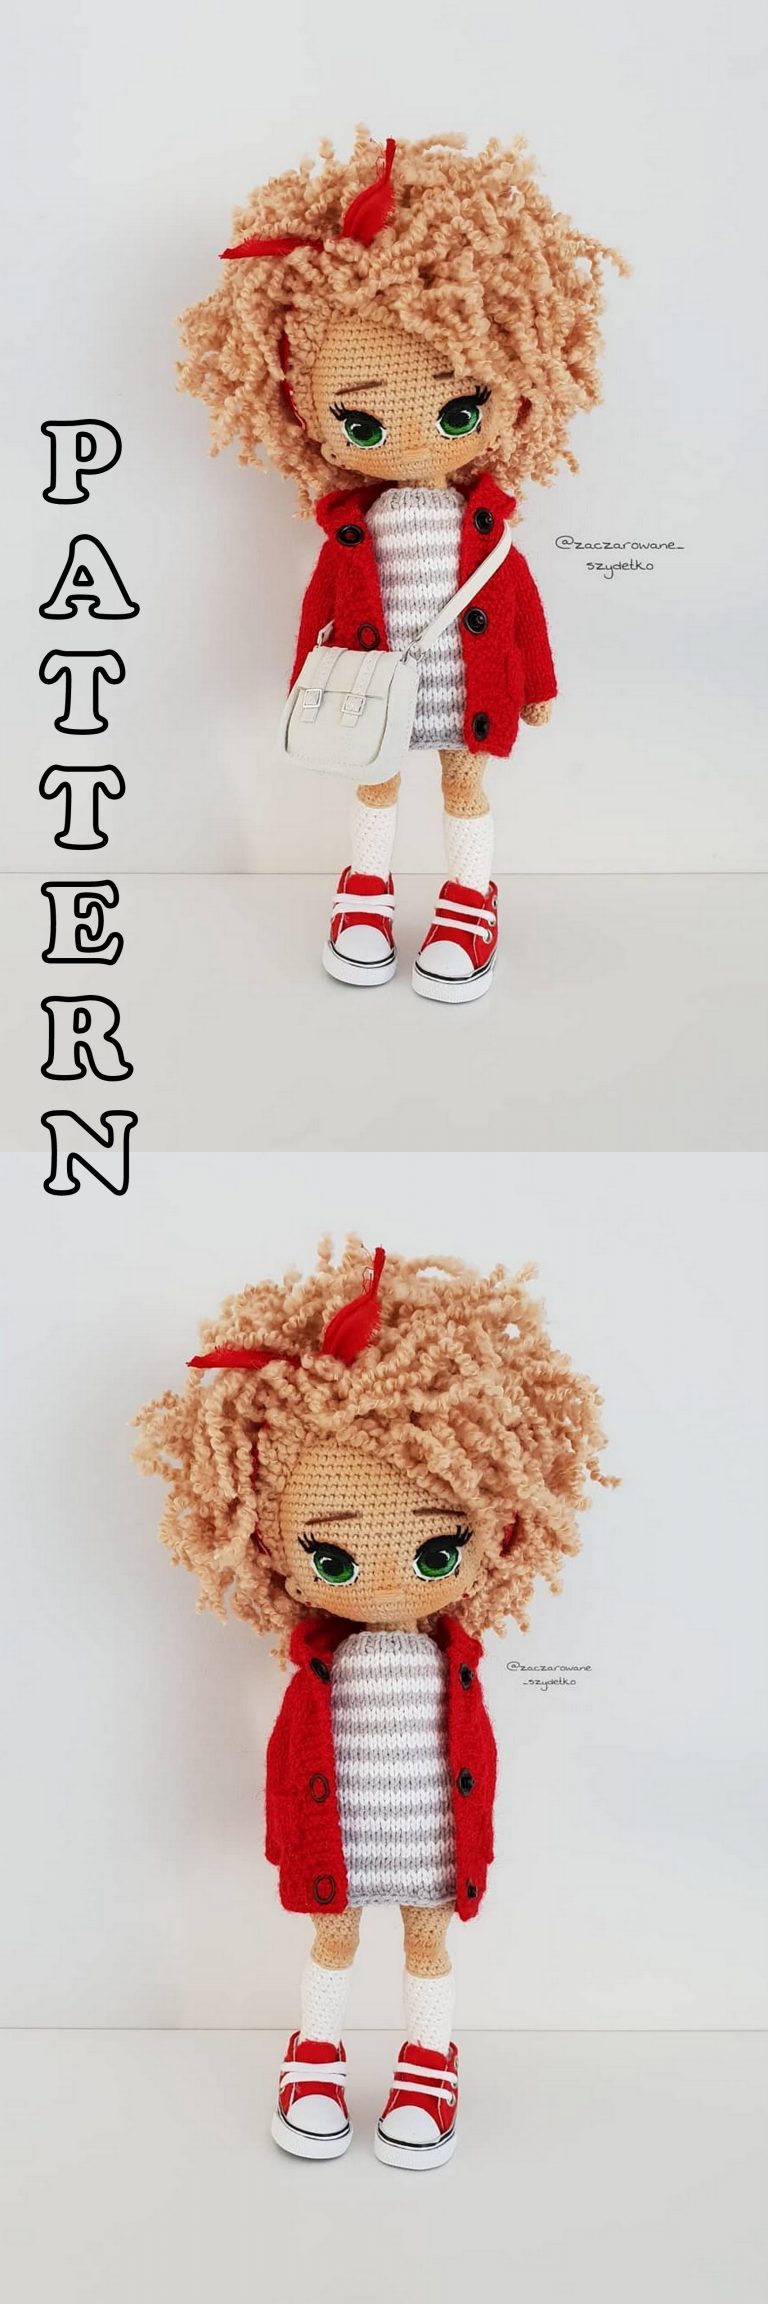 Amigurumi Lorax Teddy Bear Free Crochet Pattern